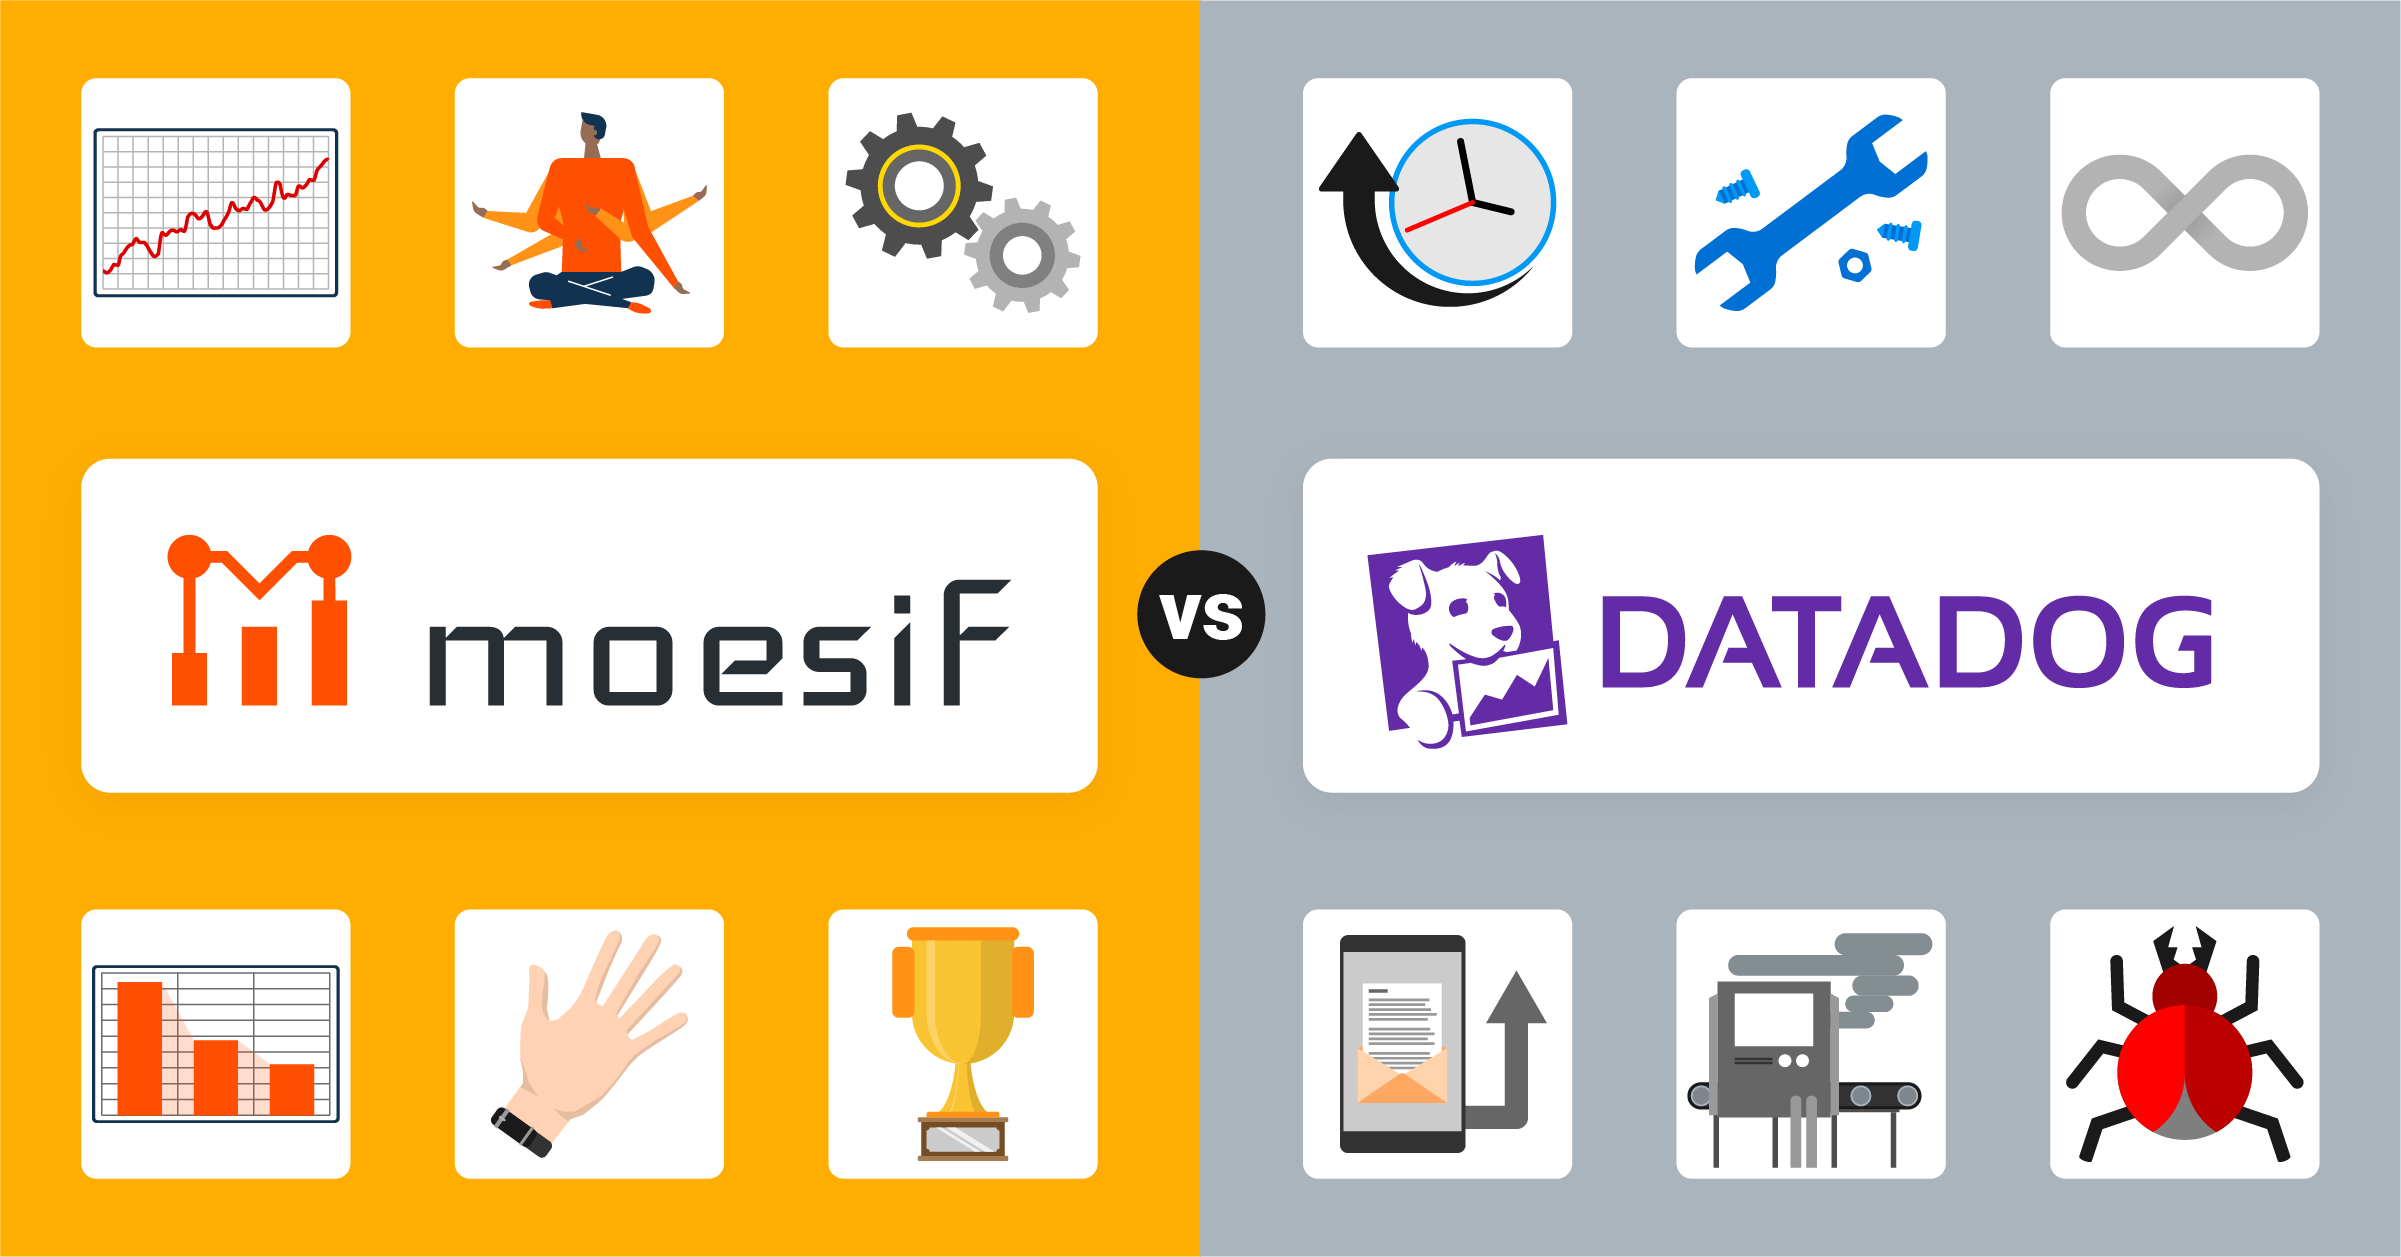 Moesif vs Datadog